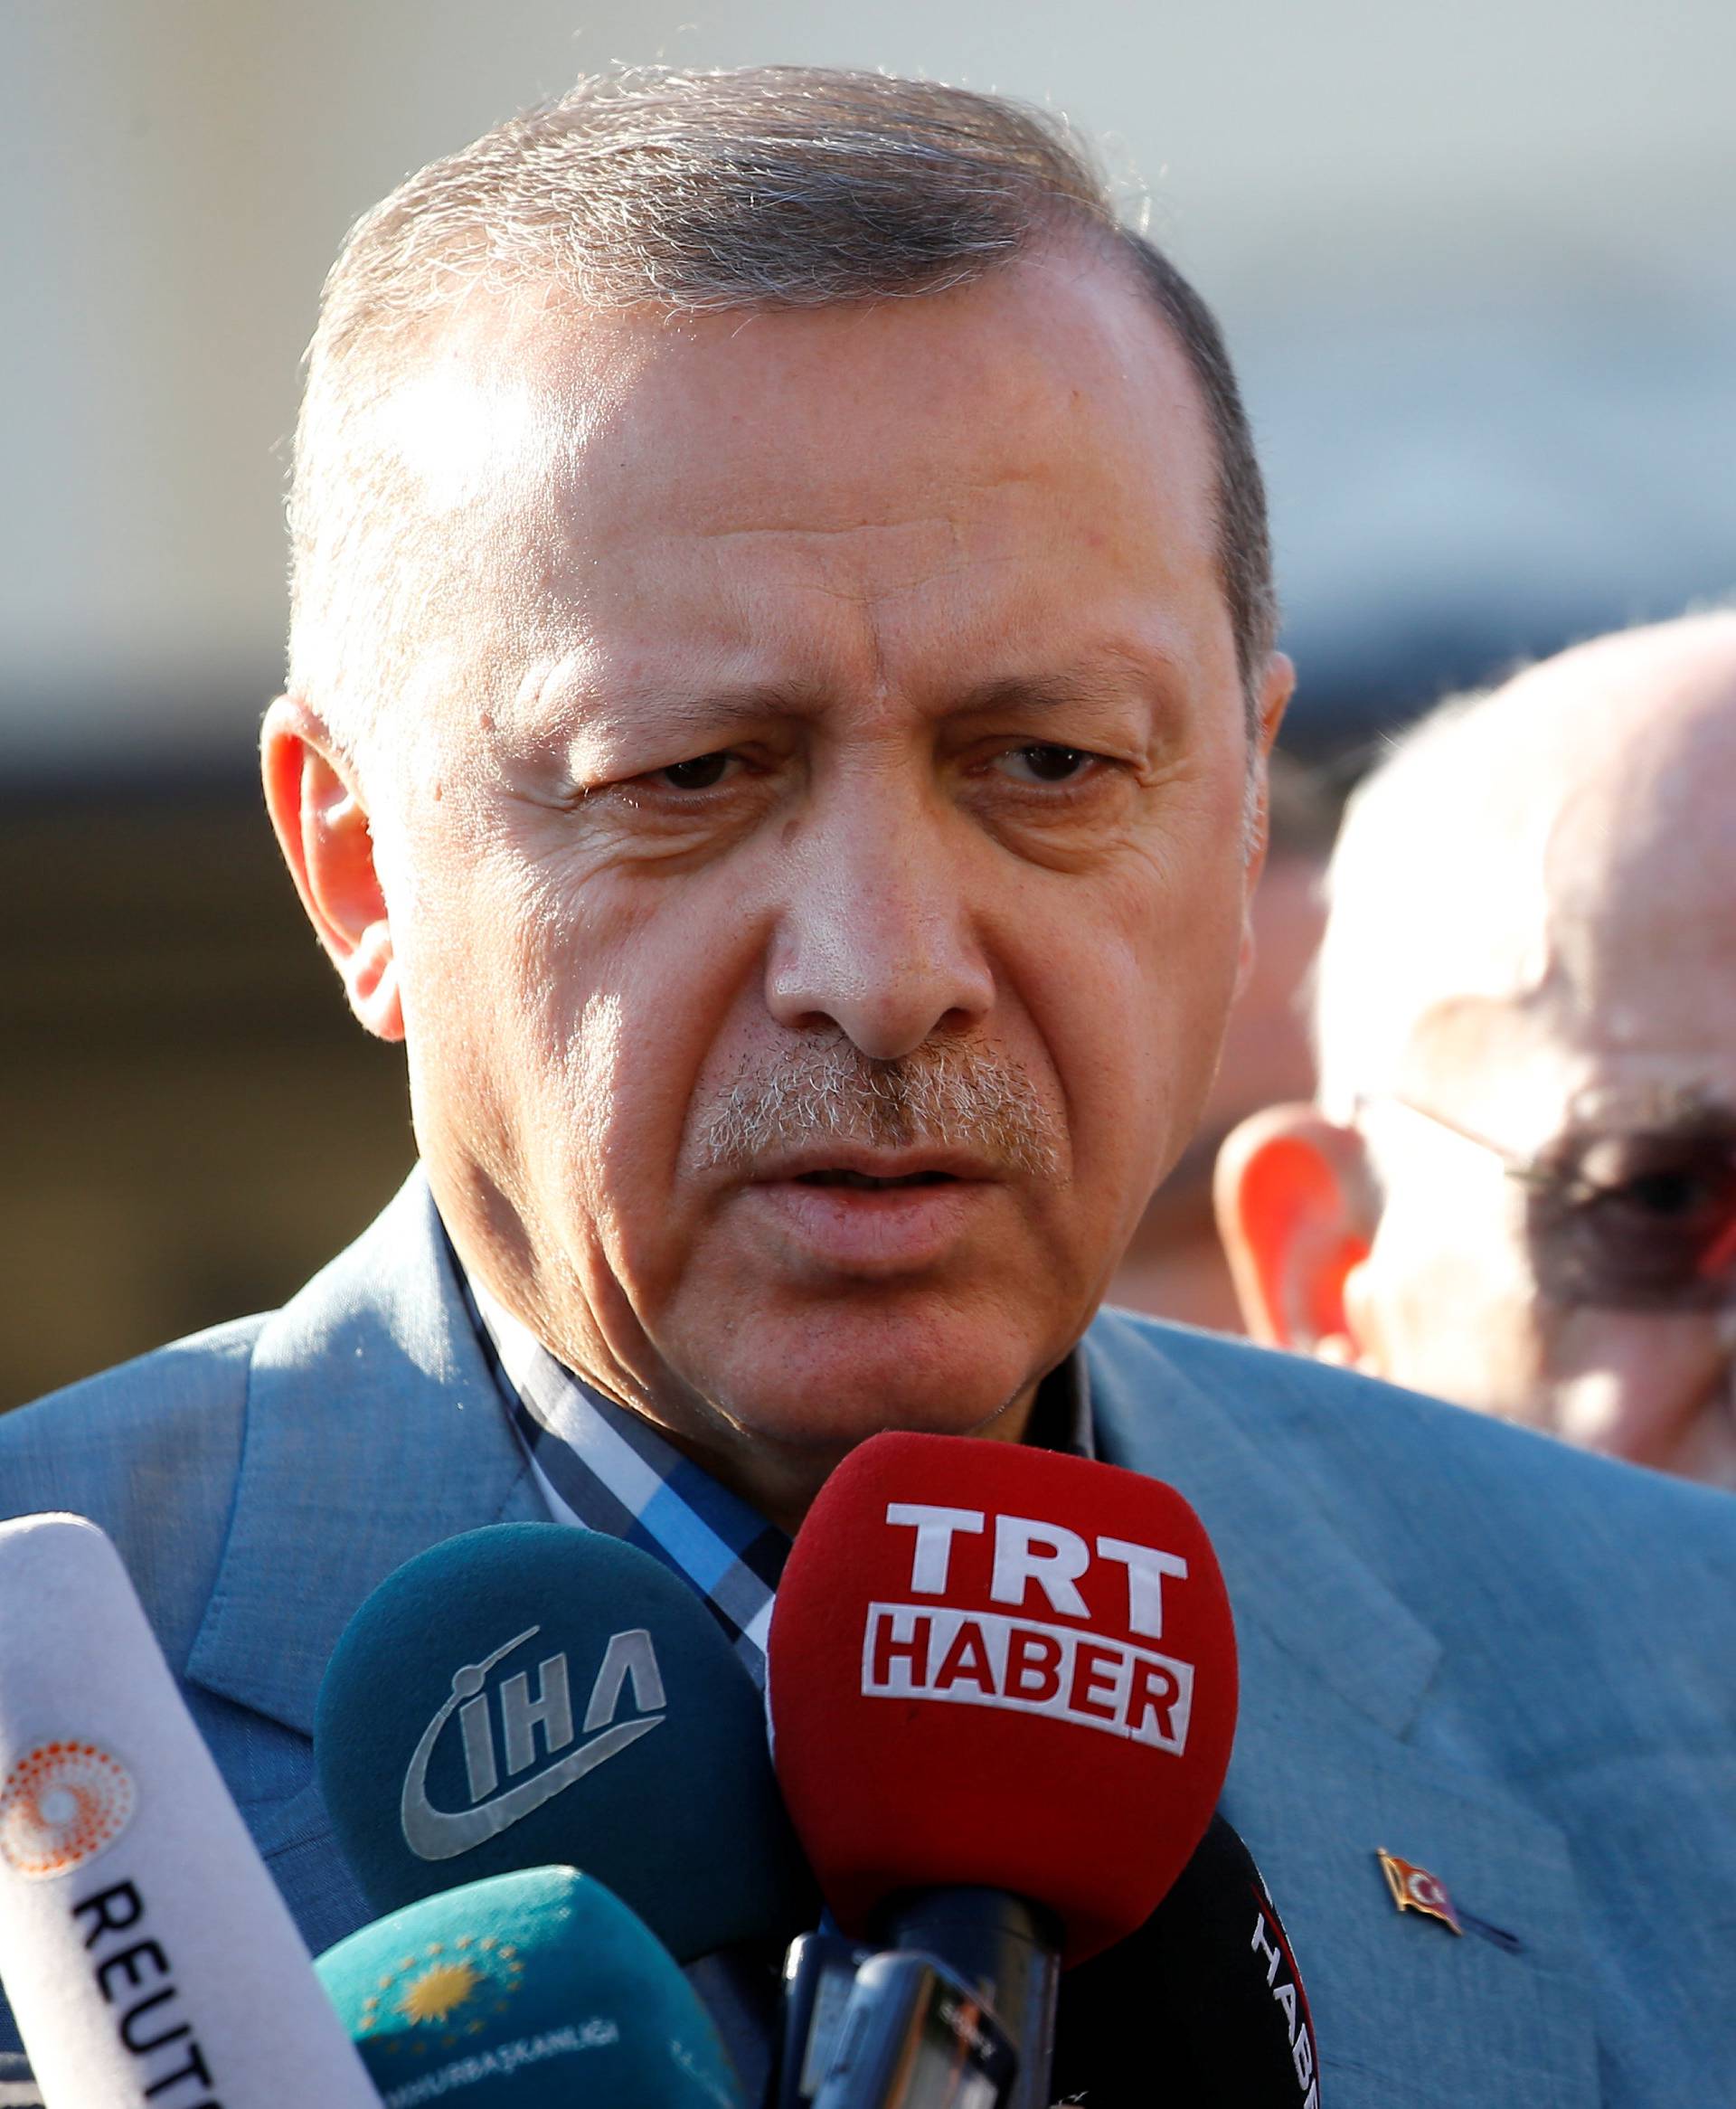 Turkey's President Erdogan talks to media after the Eid al-Fitr prayers in Istanbul